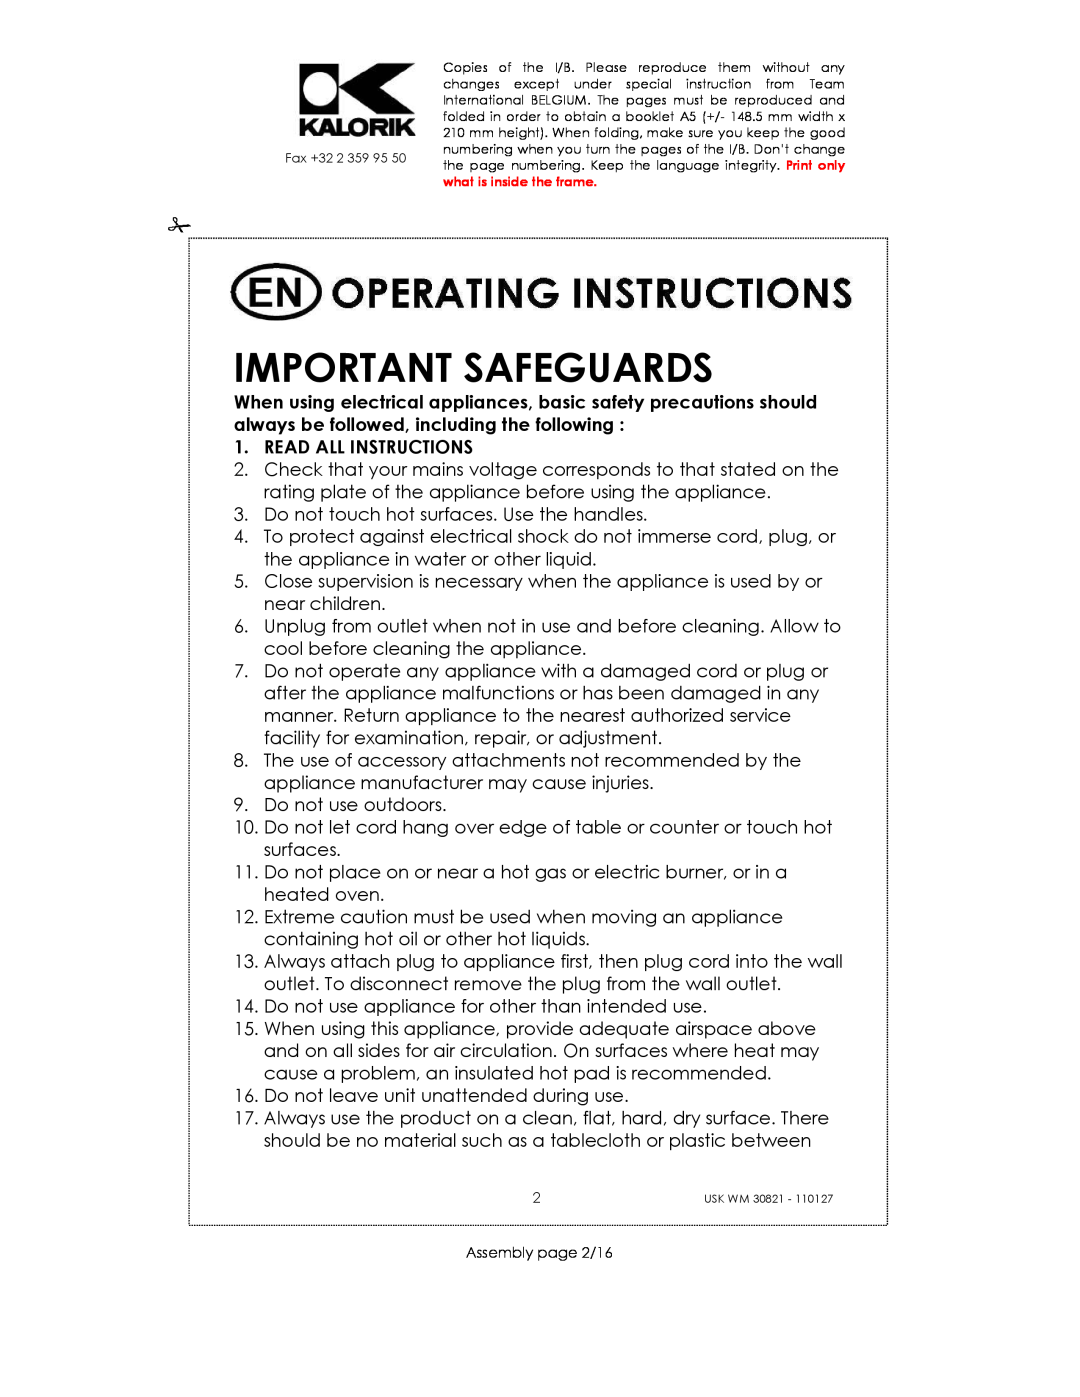 Kalorik USK WM 30821 manual Important Safeguards, Read All Instructions 